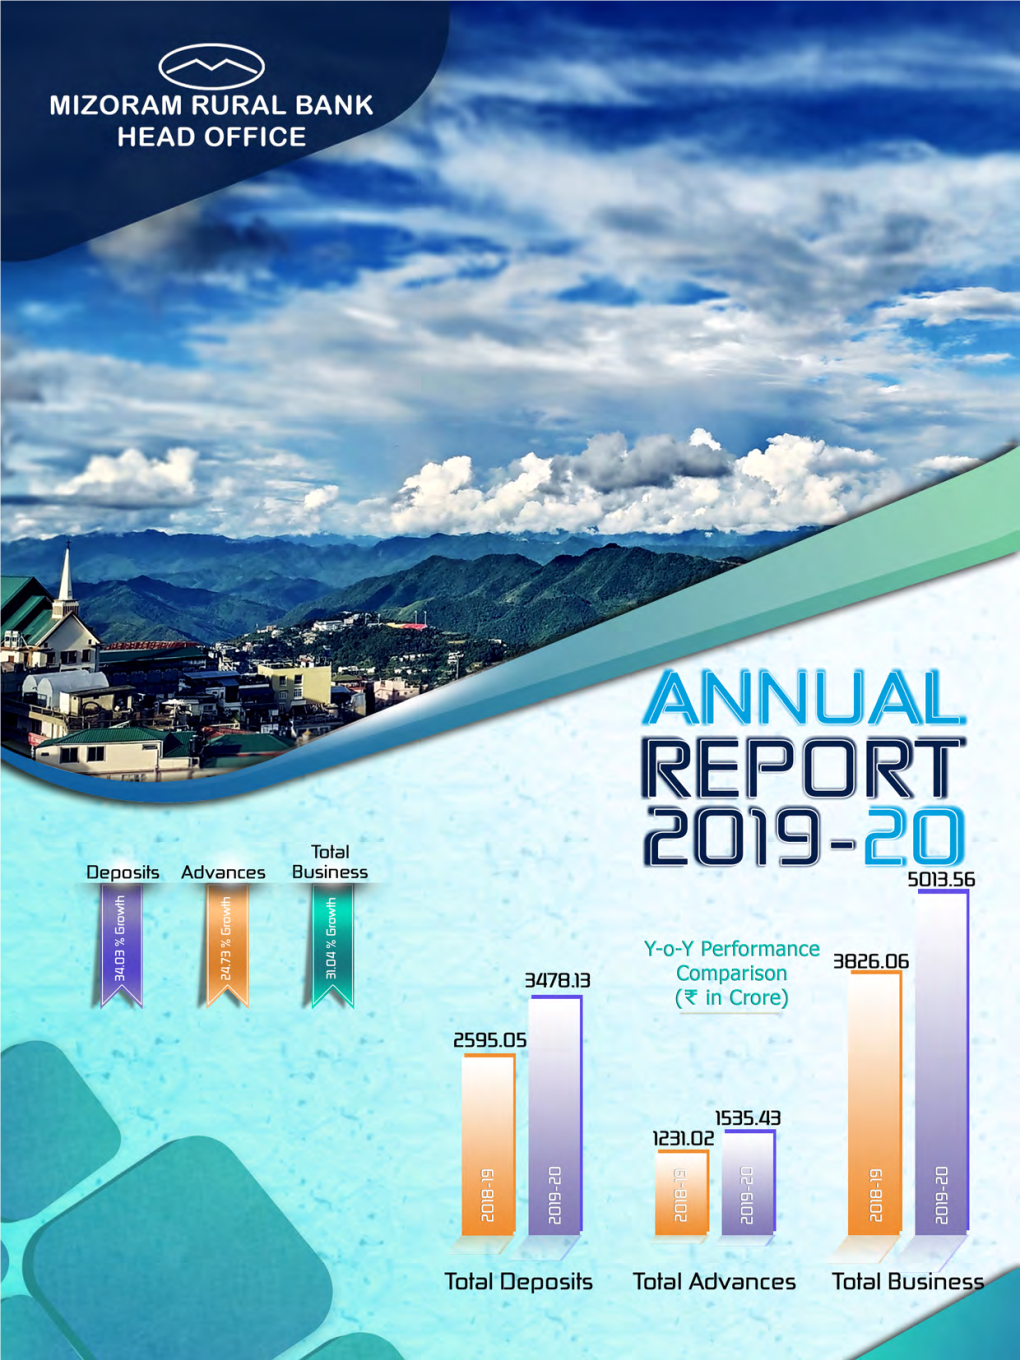 Annual Report 2019 - 20